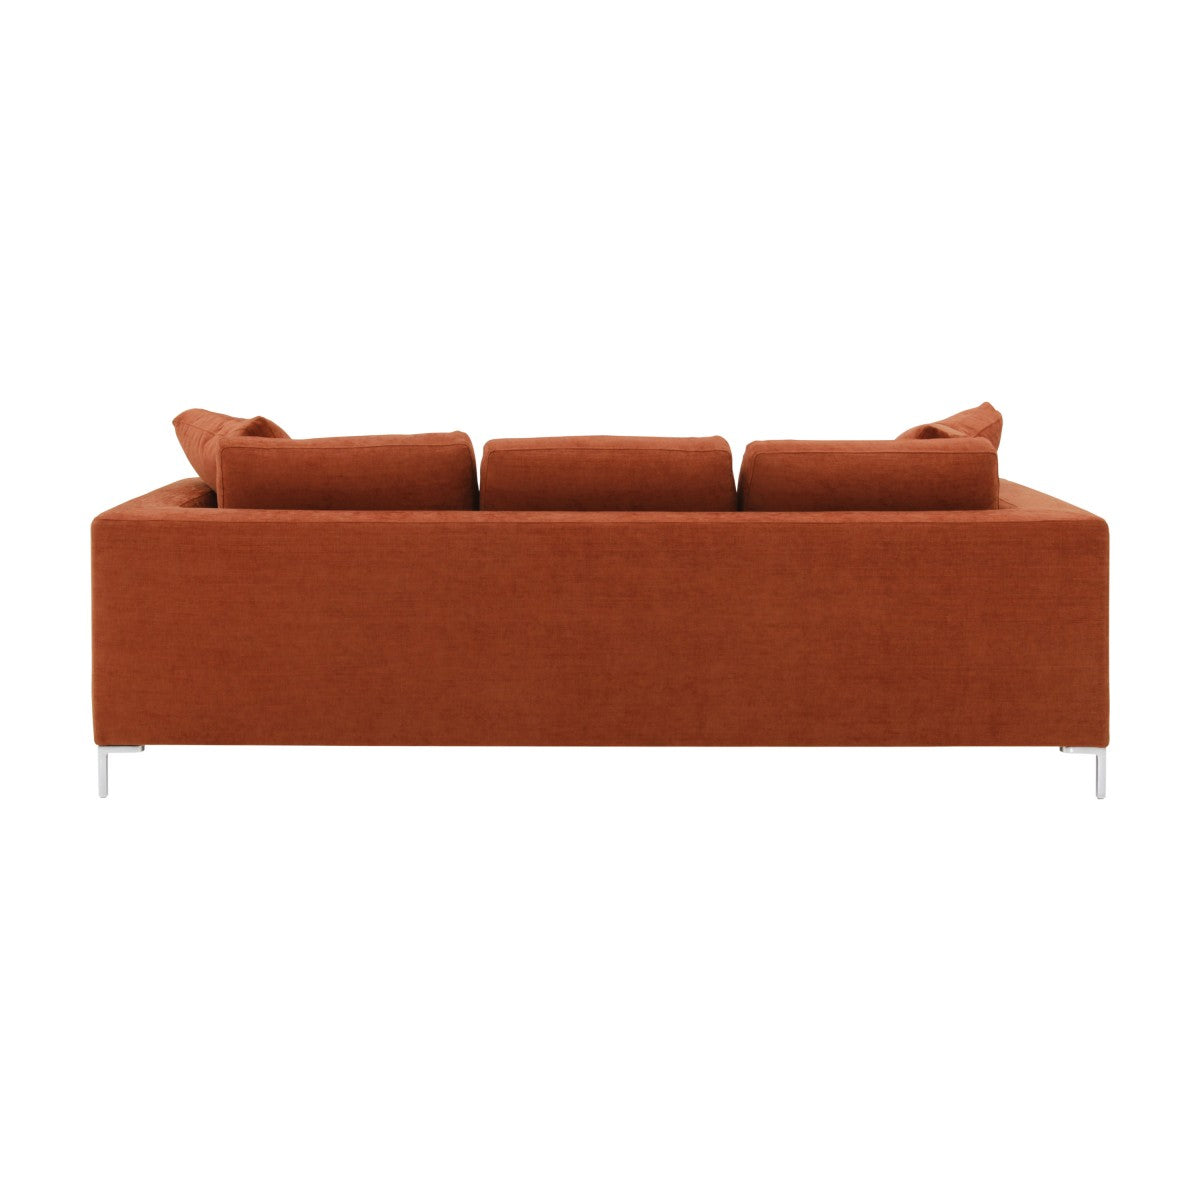 Javier Bespoke Upholstered Modern Style Four Seater Sofa MS9614F Custom Made To Order